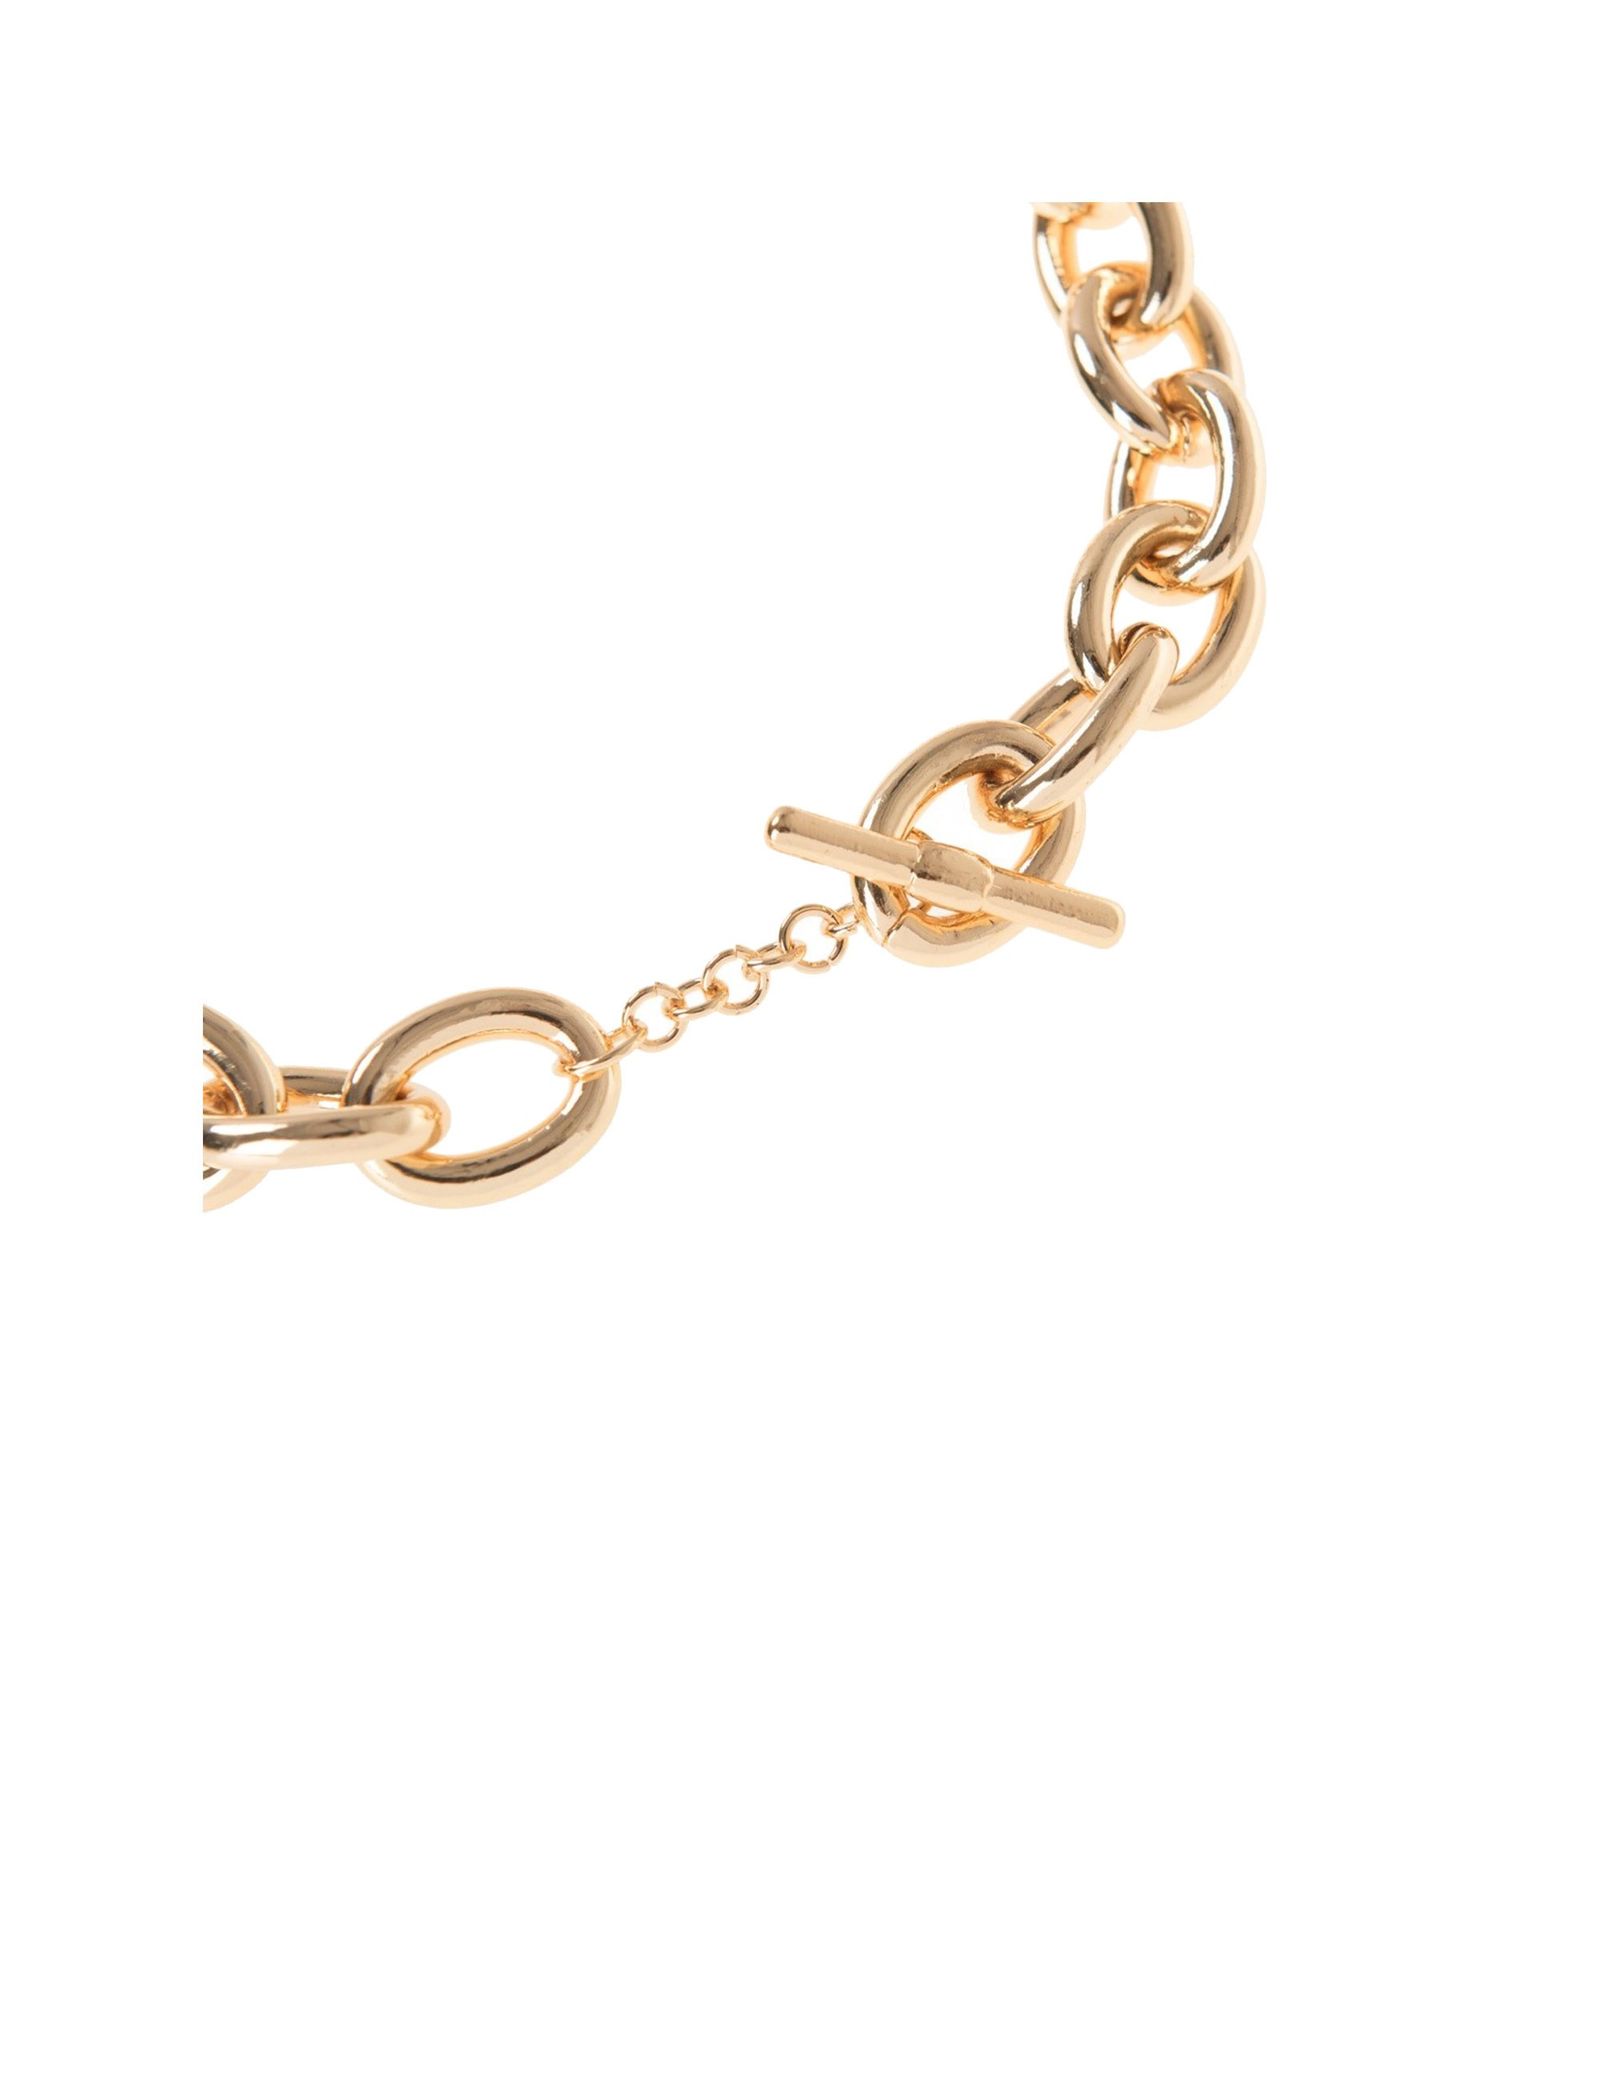 گردنبند زنجیری زنانه - پارفوا - طلايي - 4